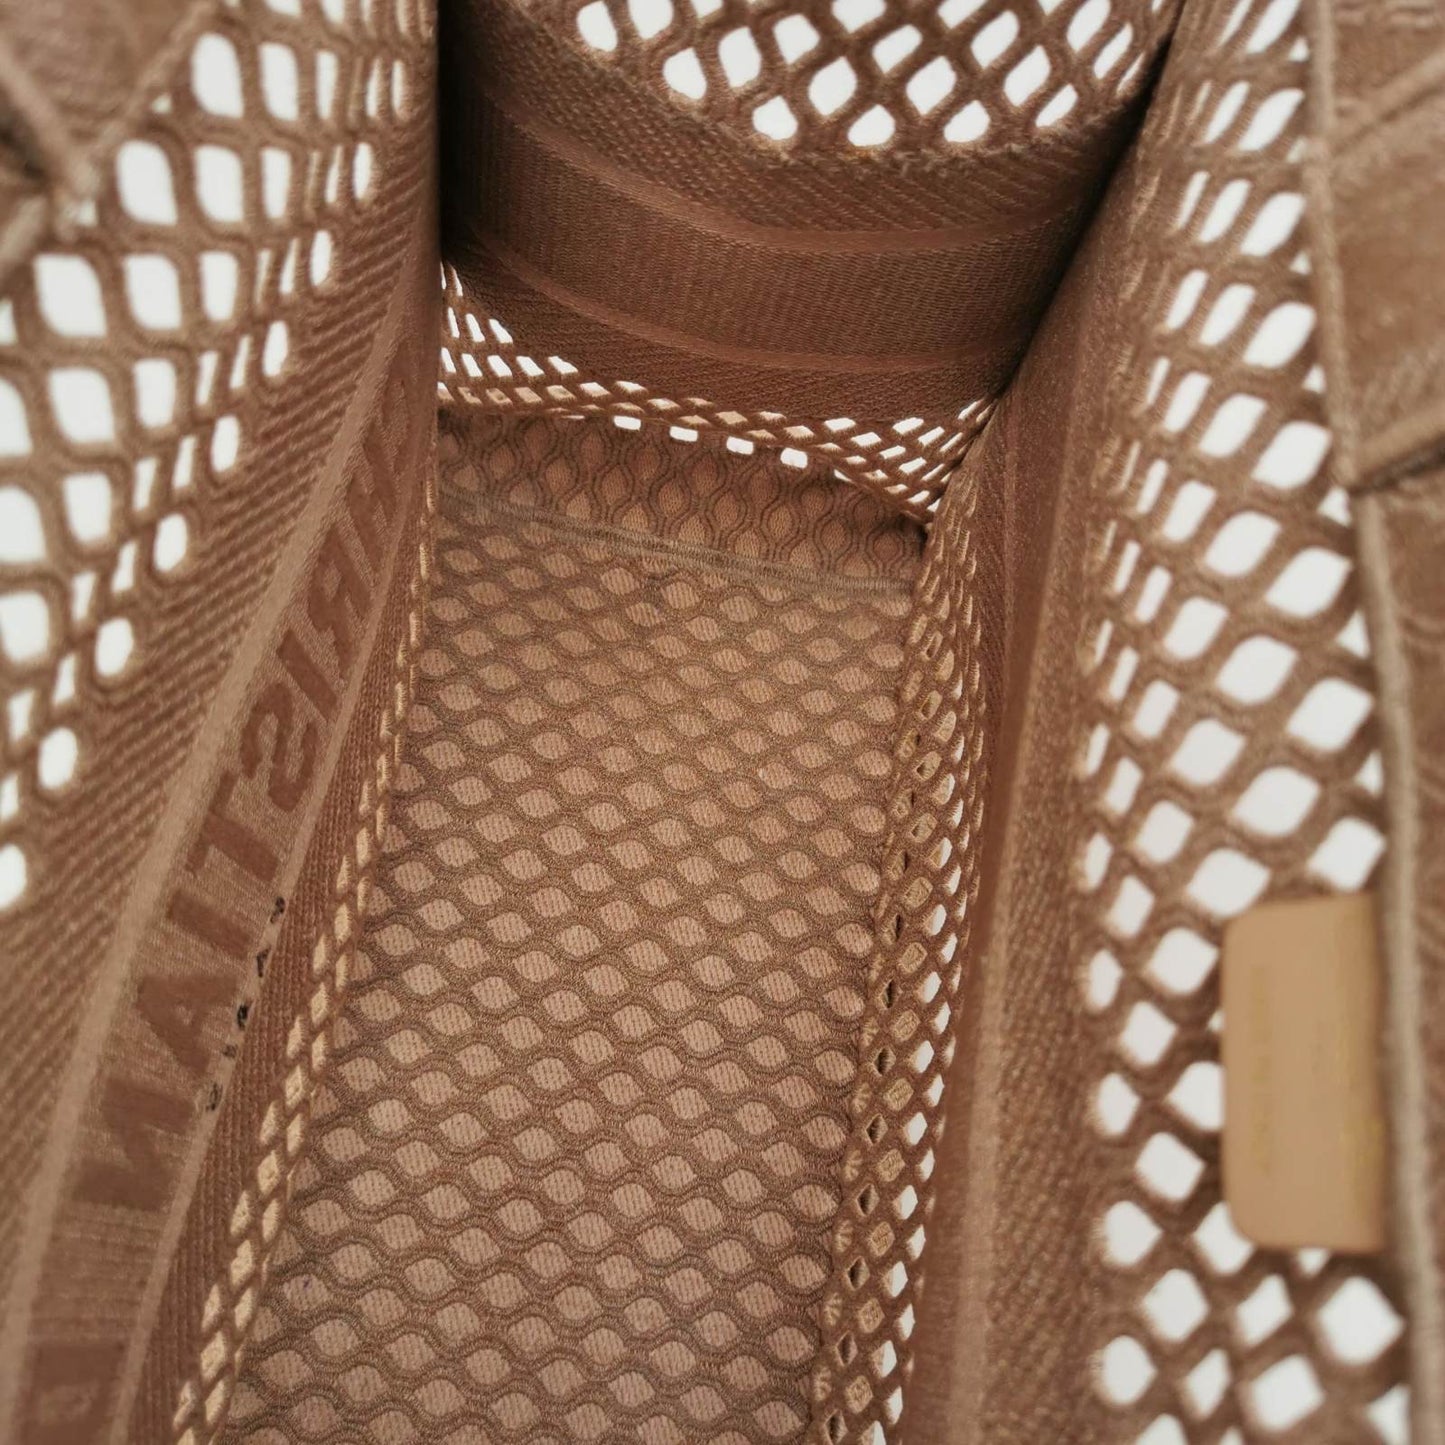 Sold Christian Dior Book Tote Medium Beige Cutout Canvas Handbag